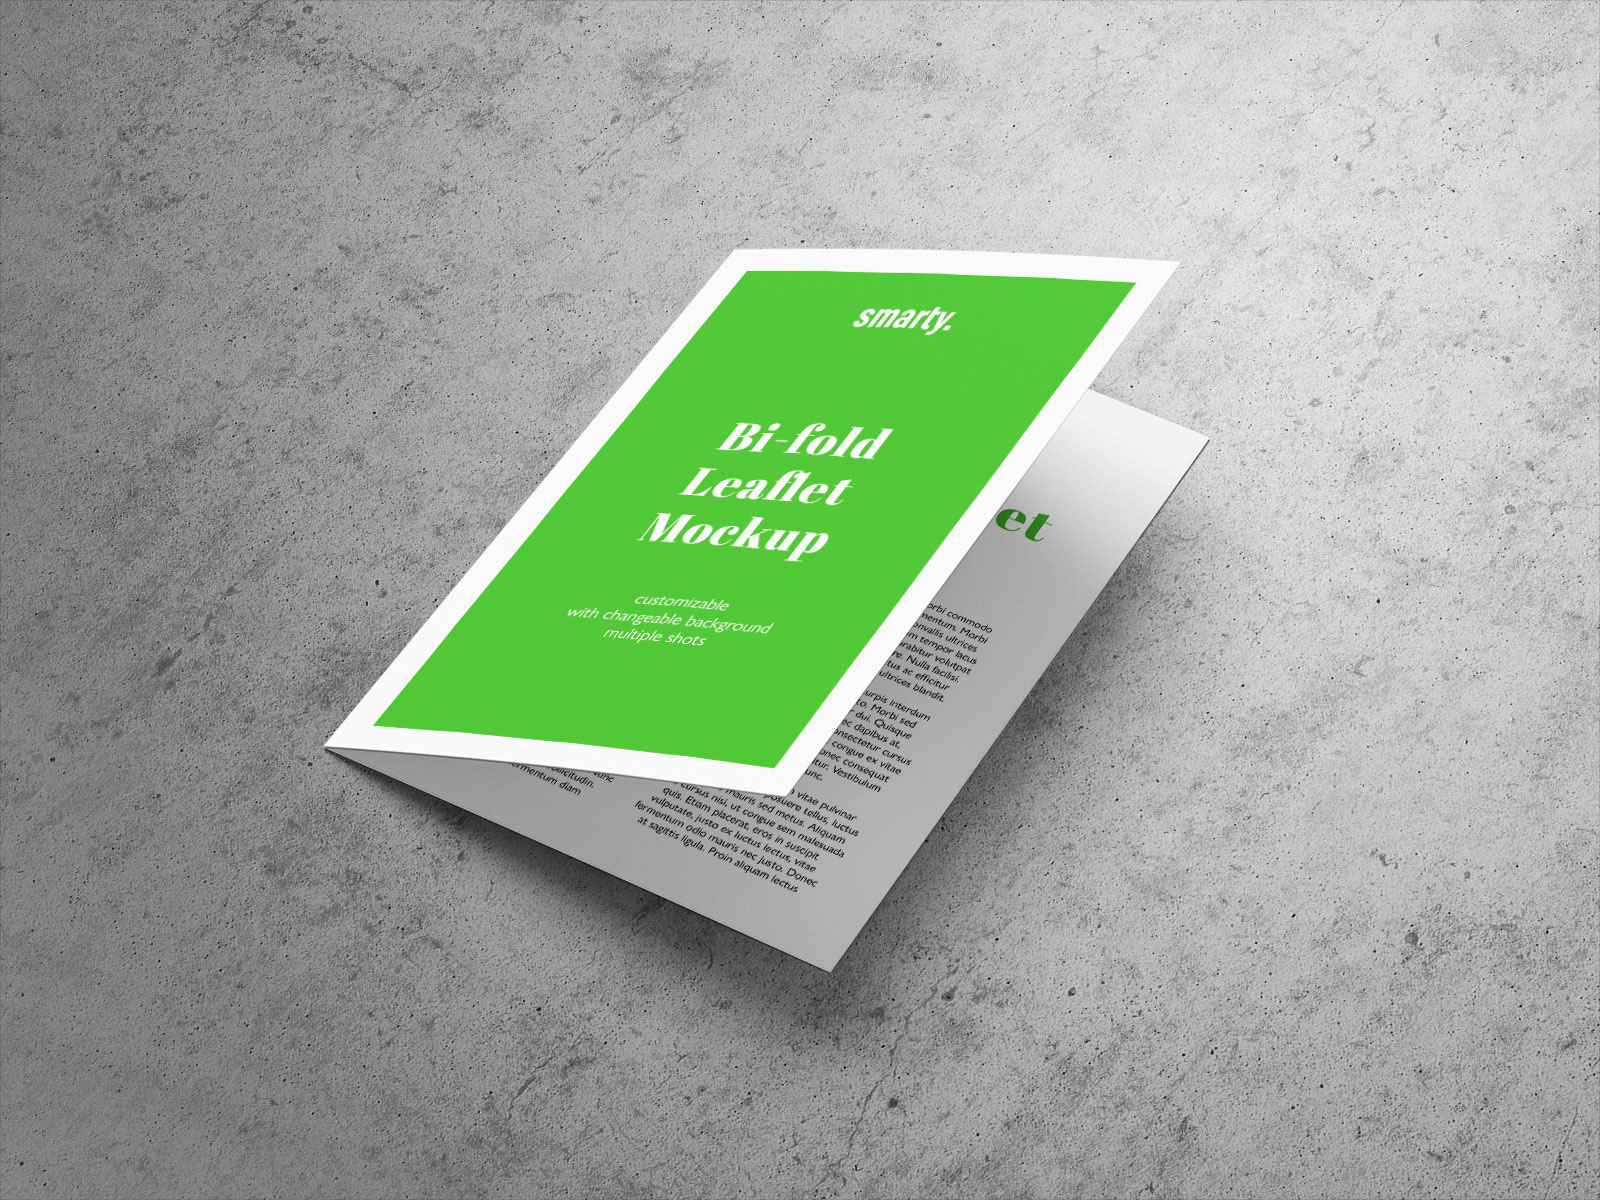 A5 Bi-Fold Brochure / Leavlet Mockup